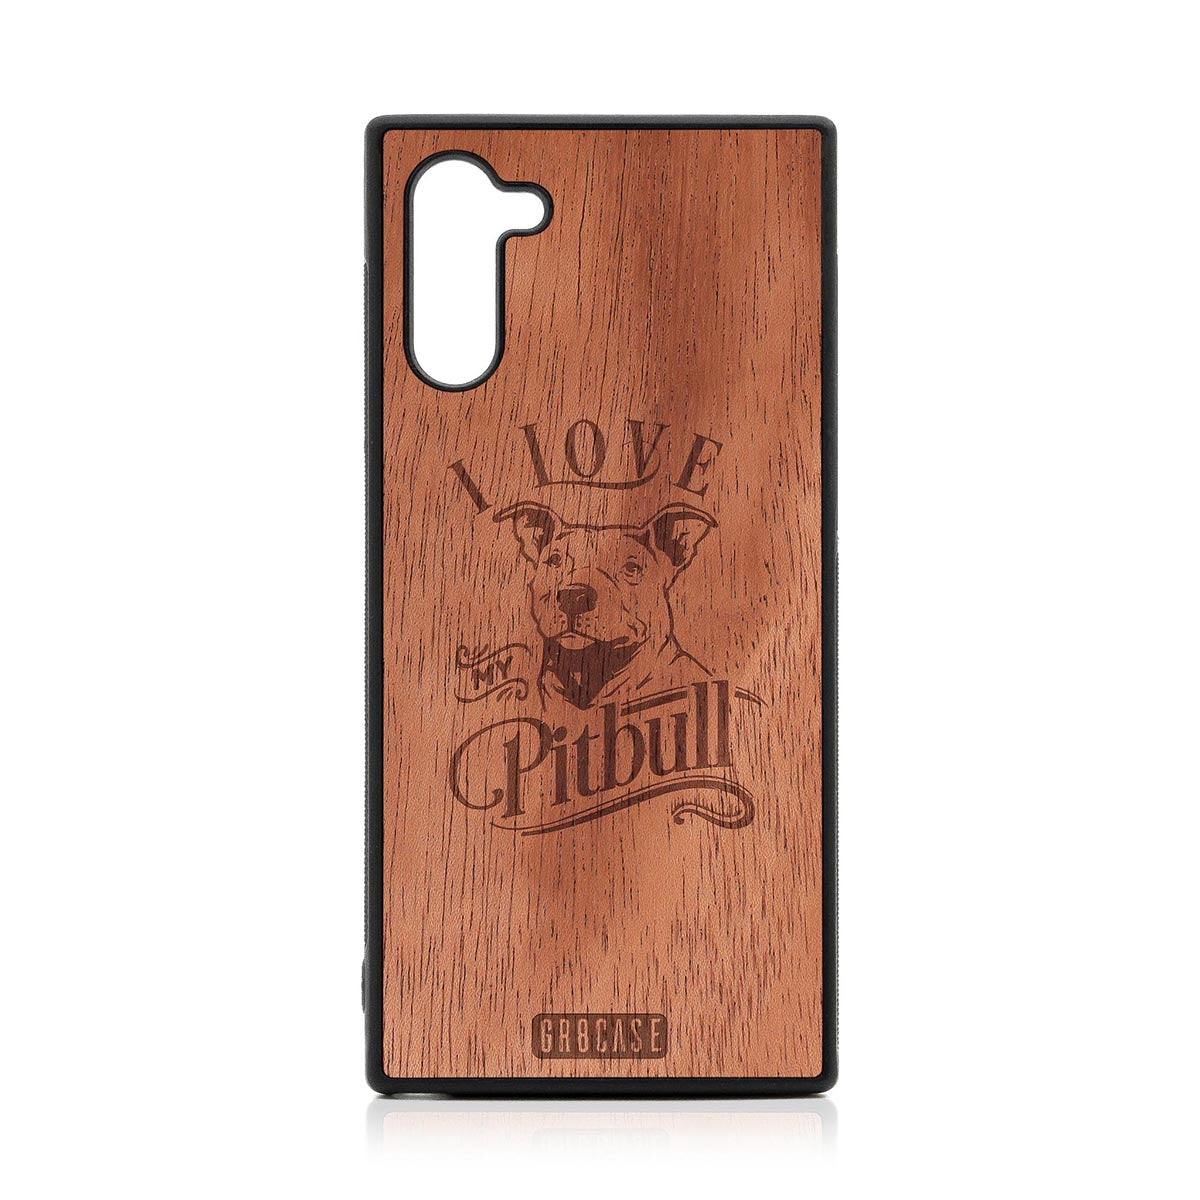 I Love My Pitbull Design Wood Case Samsung Galaxy Note 10 by GR8CASE